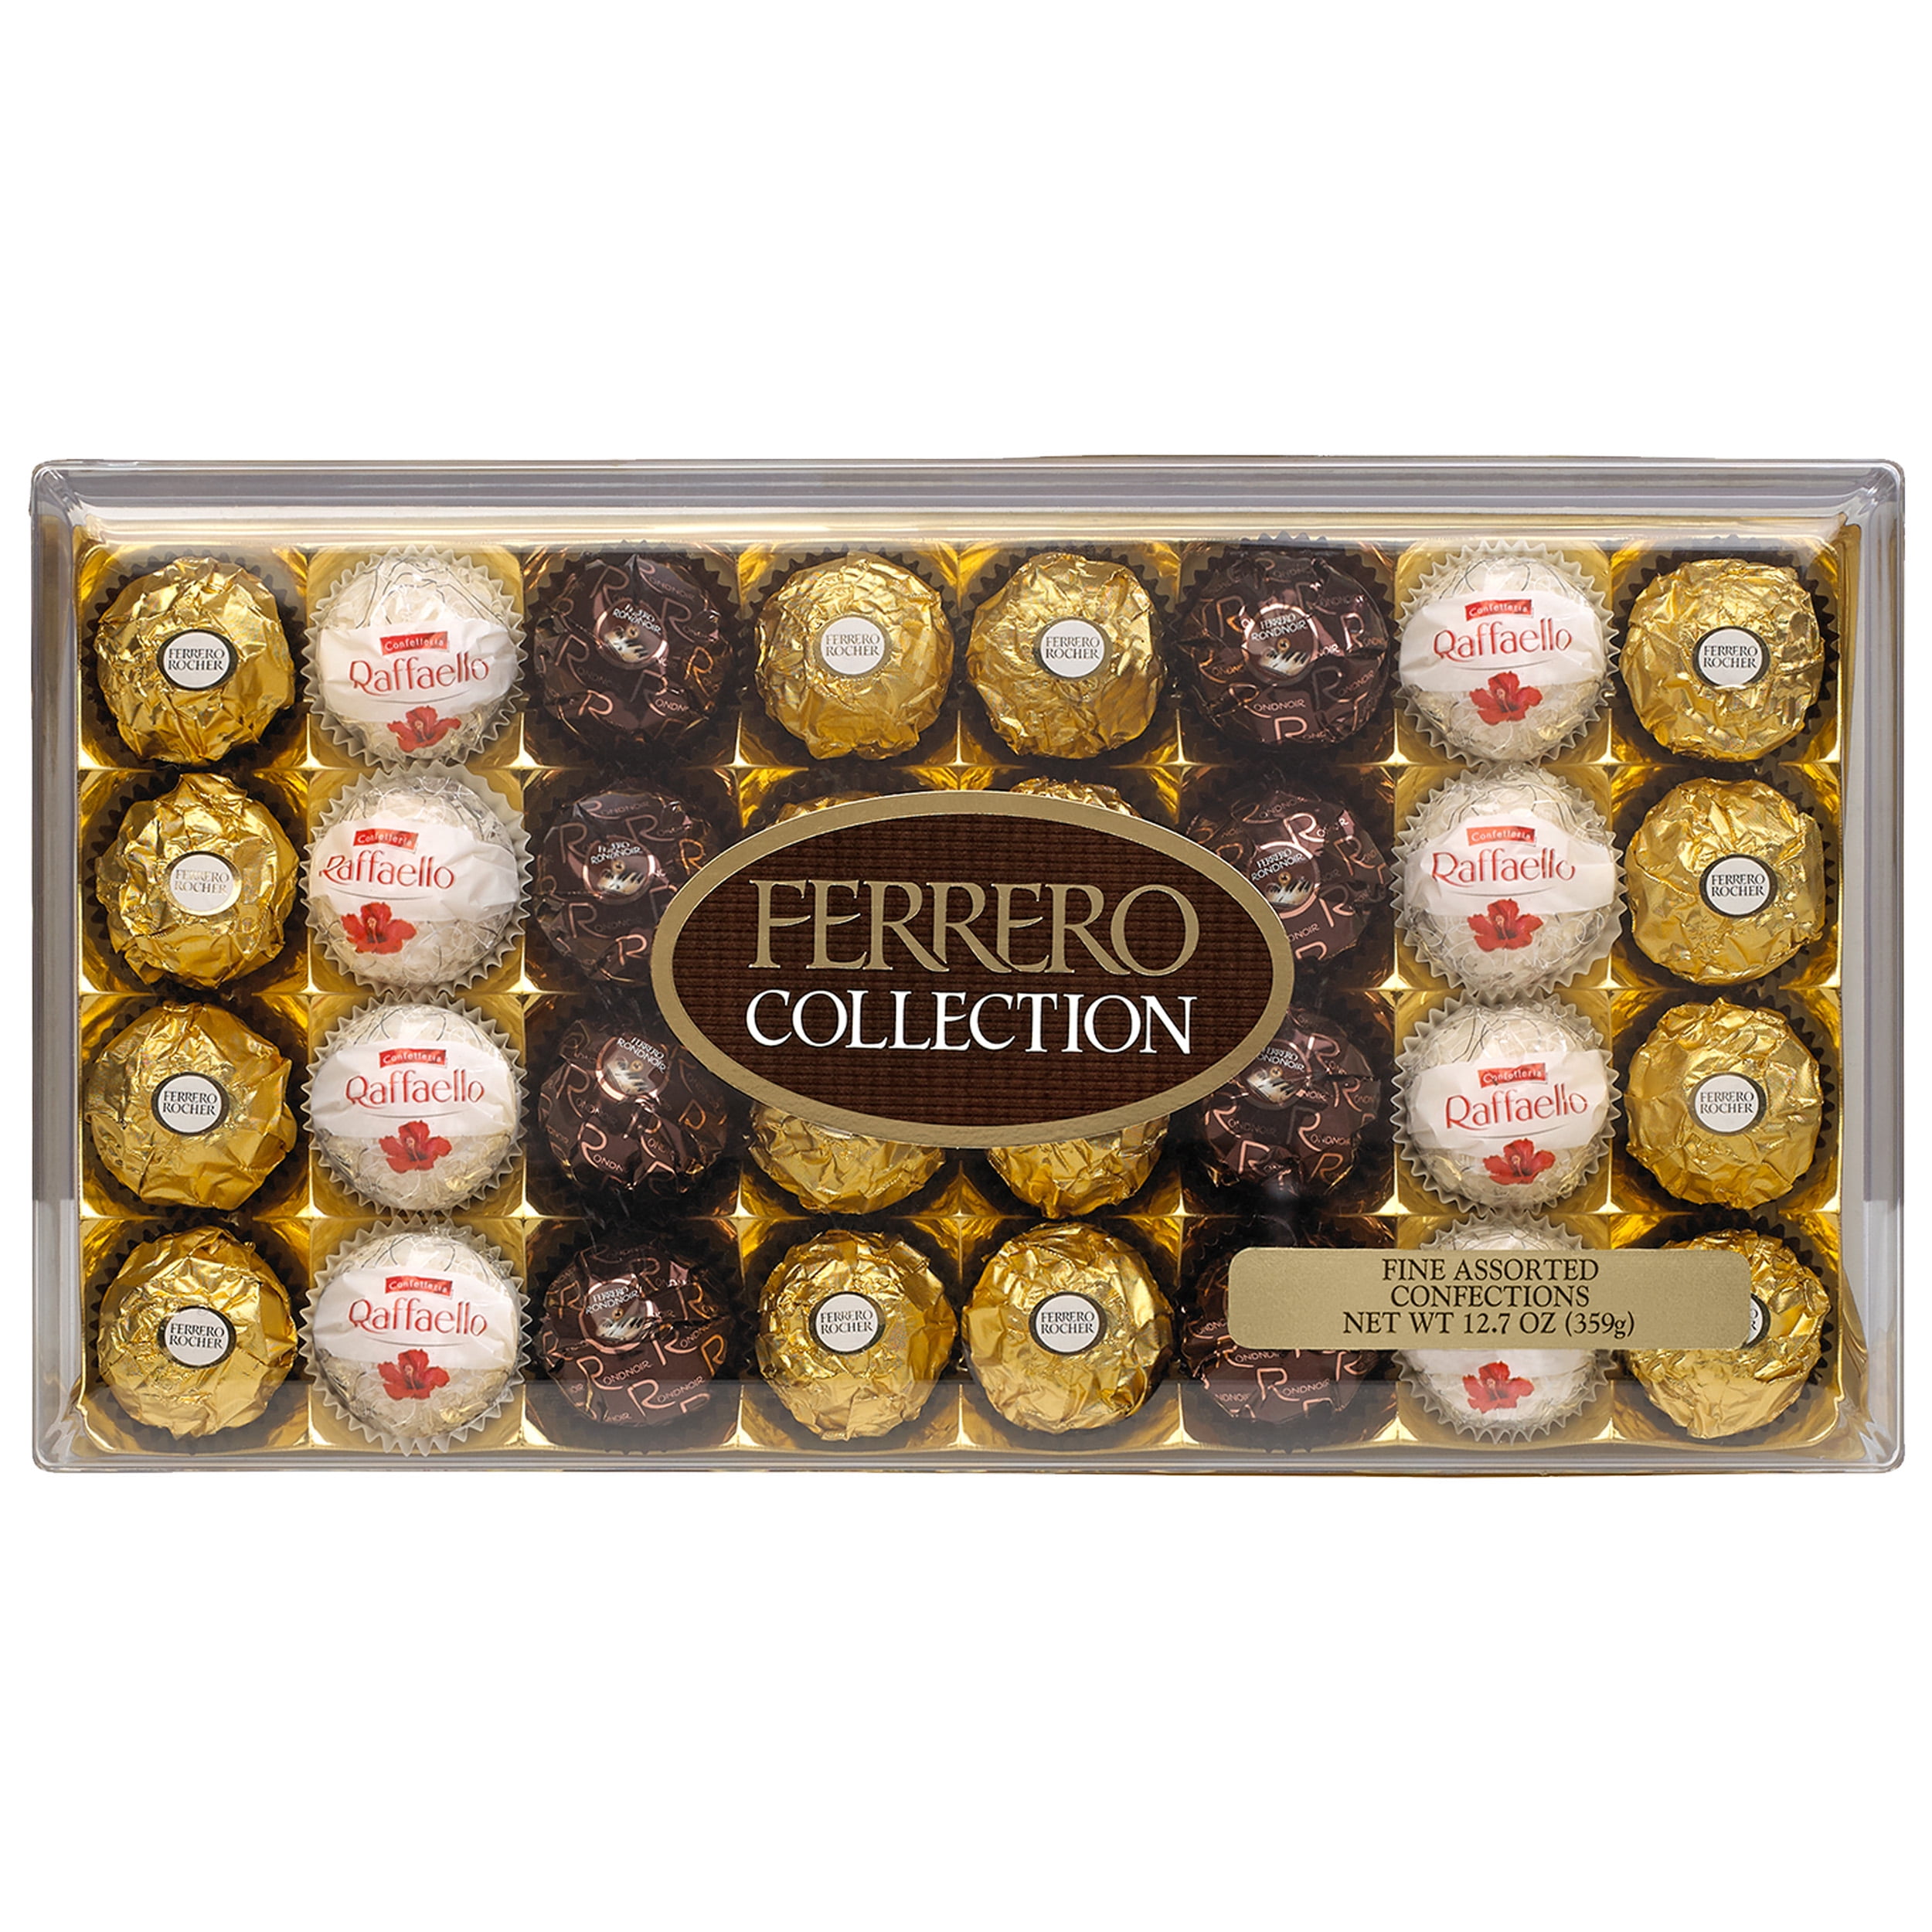 Ferrero Collection Premium Gourmet Assorted Hazelnut Milk Chocolate, Dark Chocolate and Coconut, Great Holiday Gift Box, 12.7 oz, 32 Count